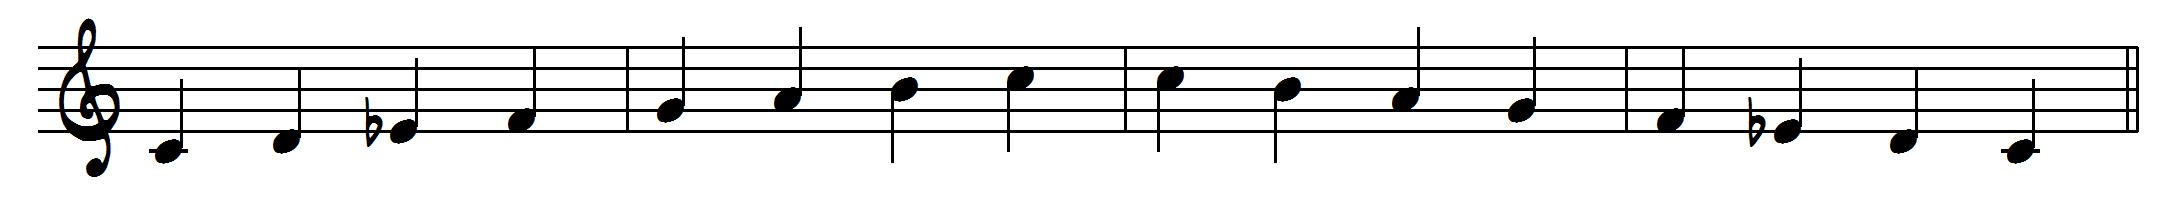 Melodic minor scale